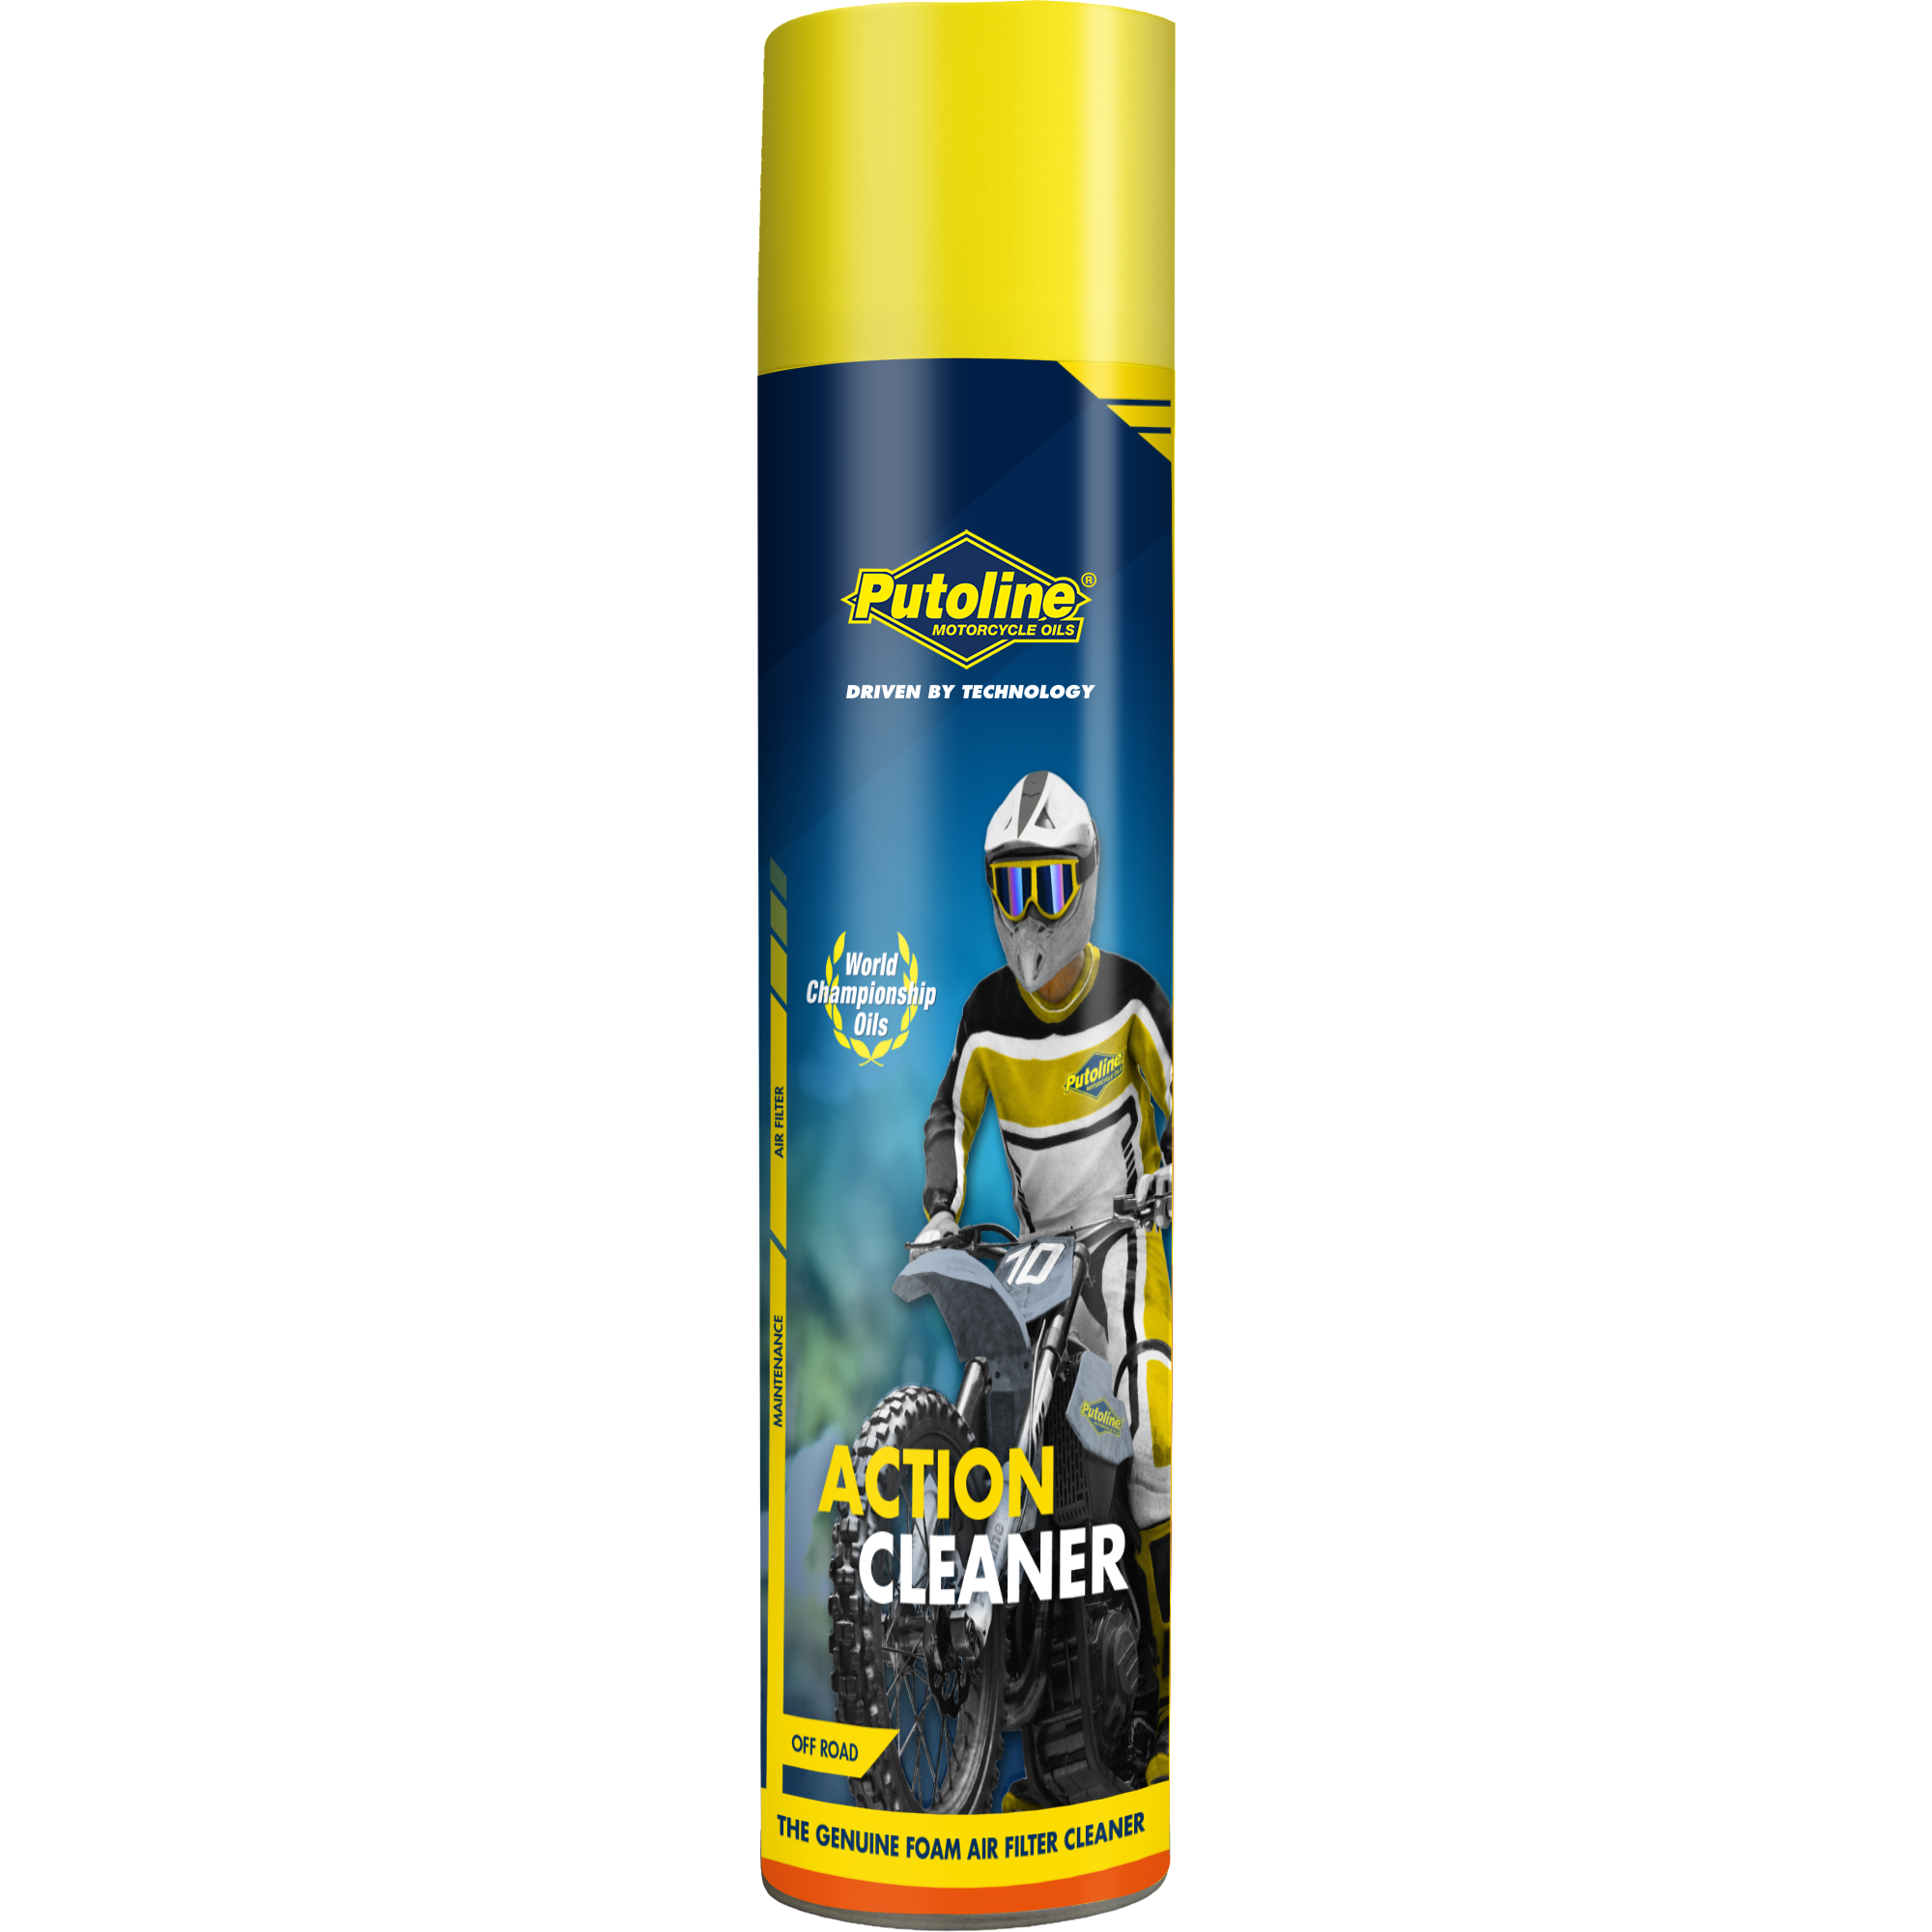 Putoline Action Cleaner, 12 x 600 ml detail 2